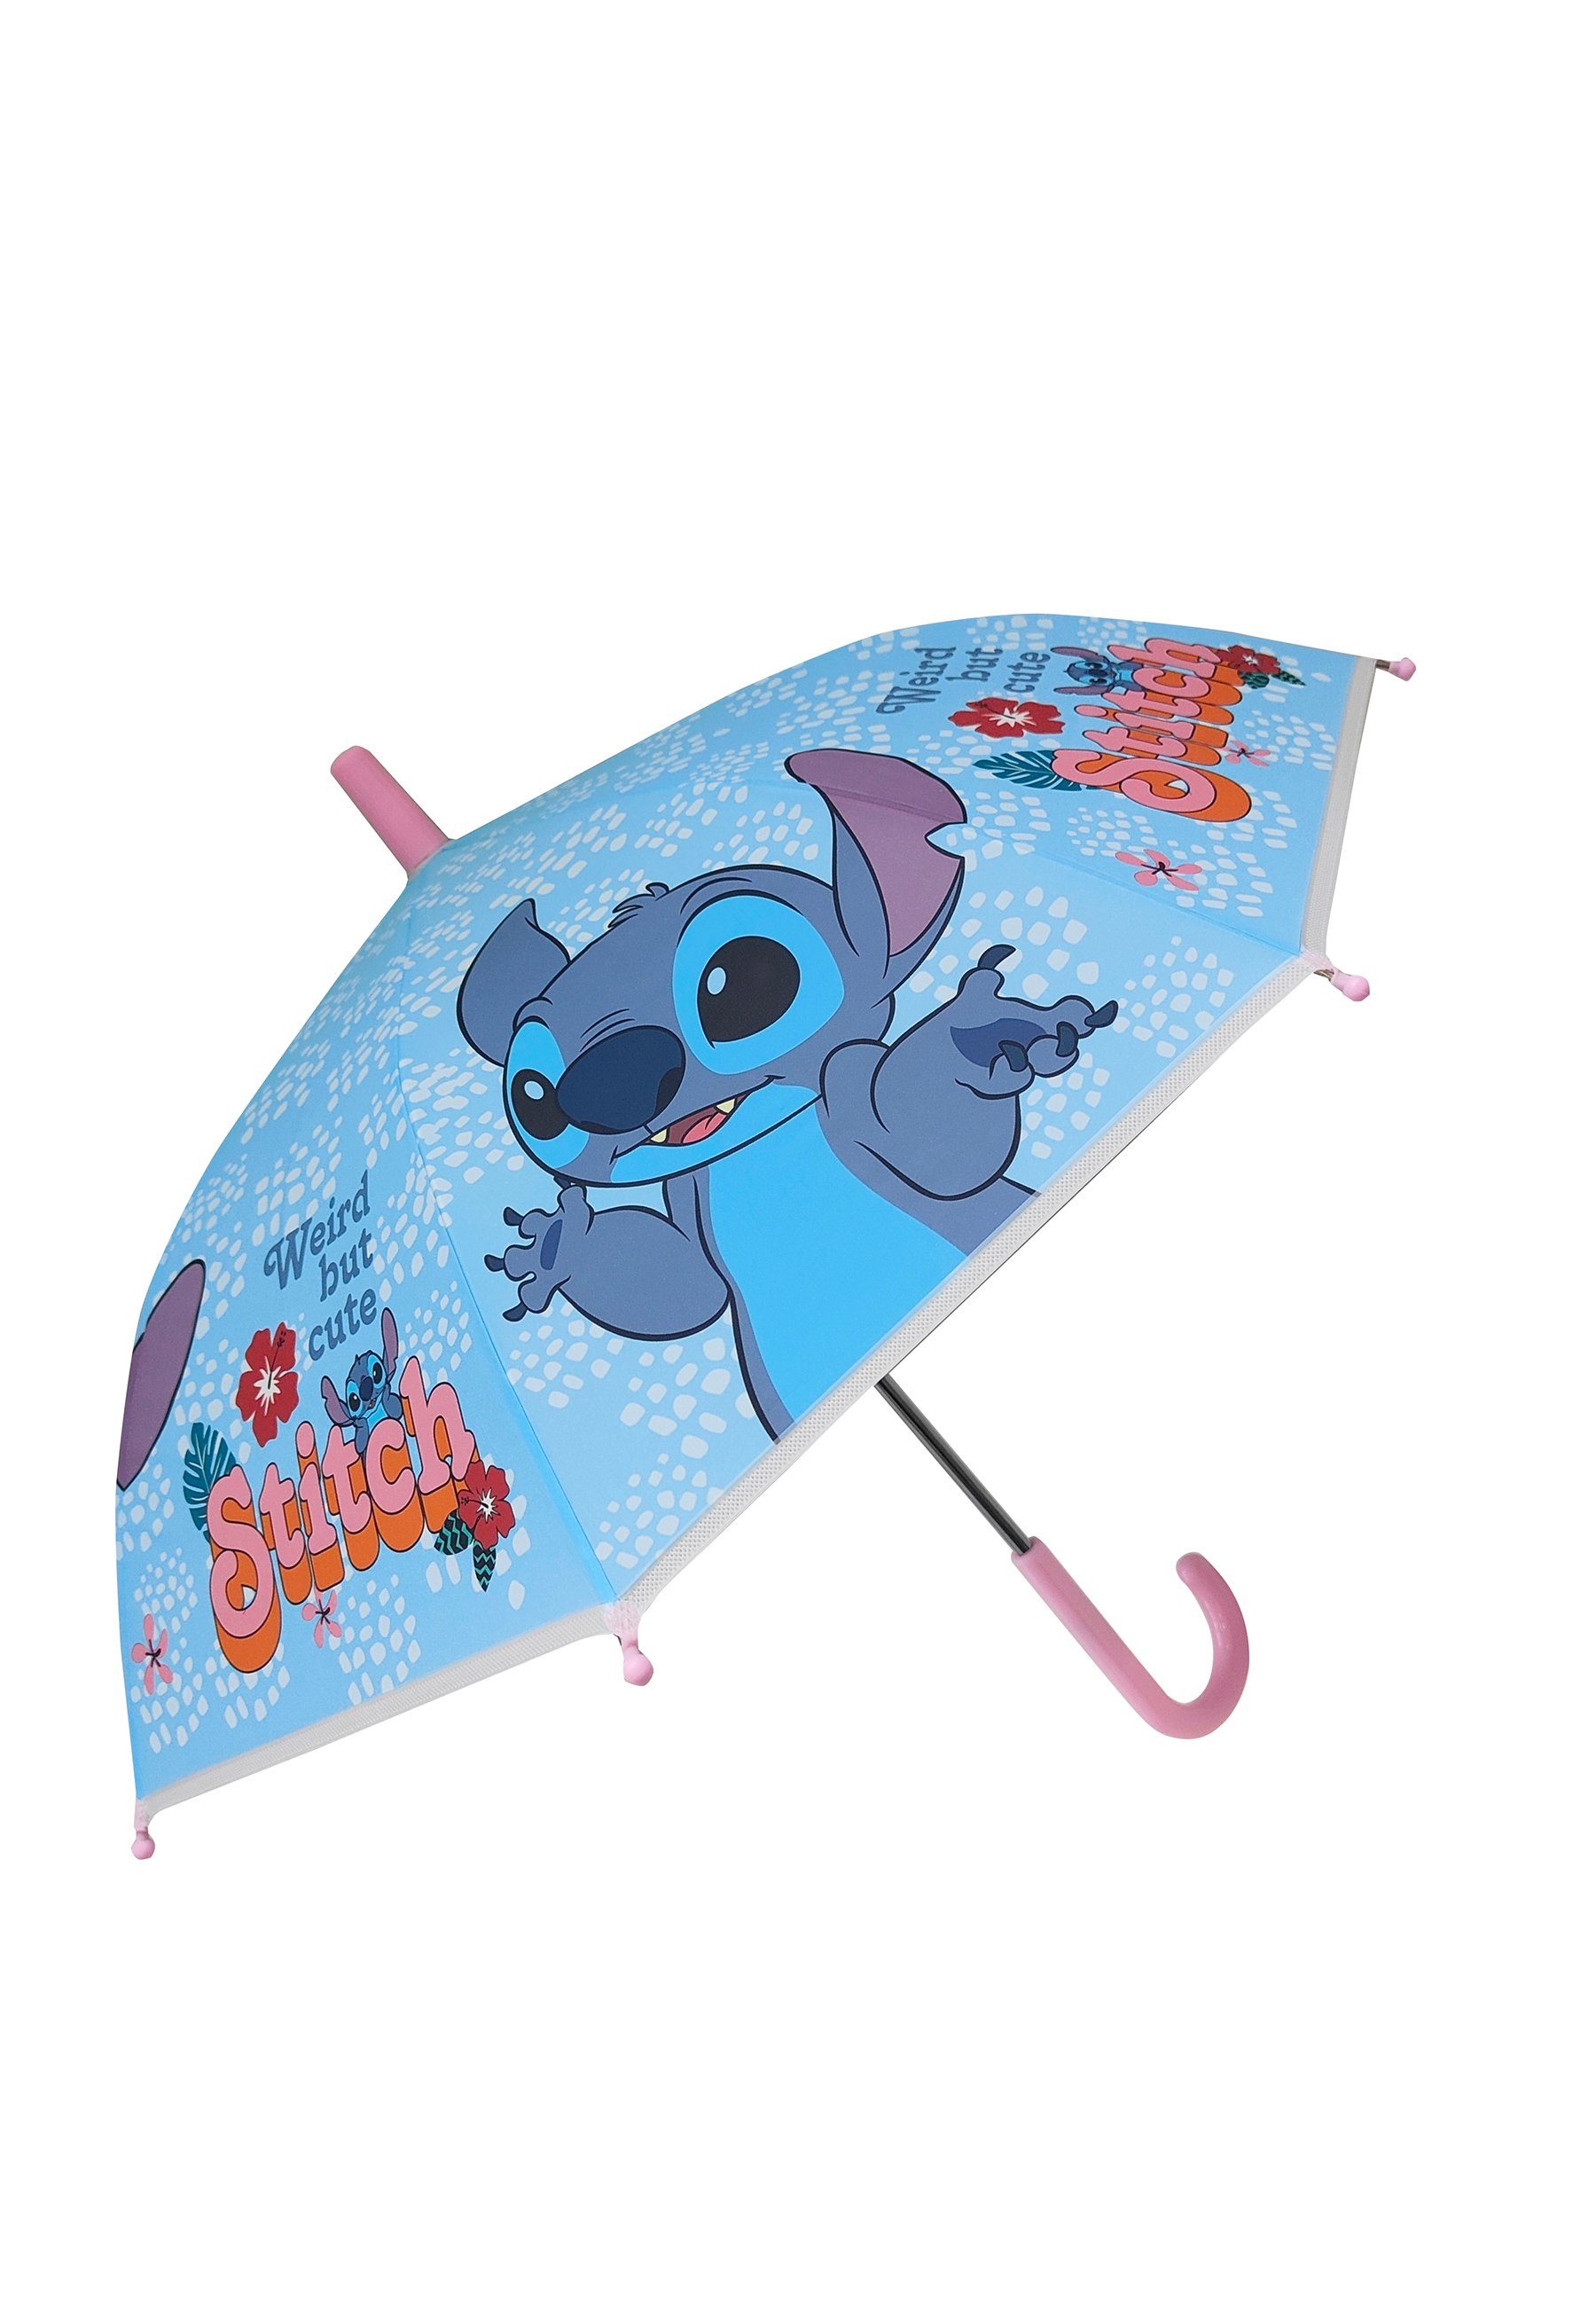 Stitch Stockregenschirm Kinder Regenschirm Kuppelschirm Stock-Schirm